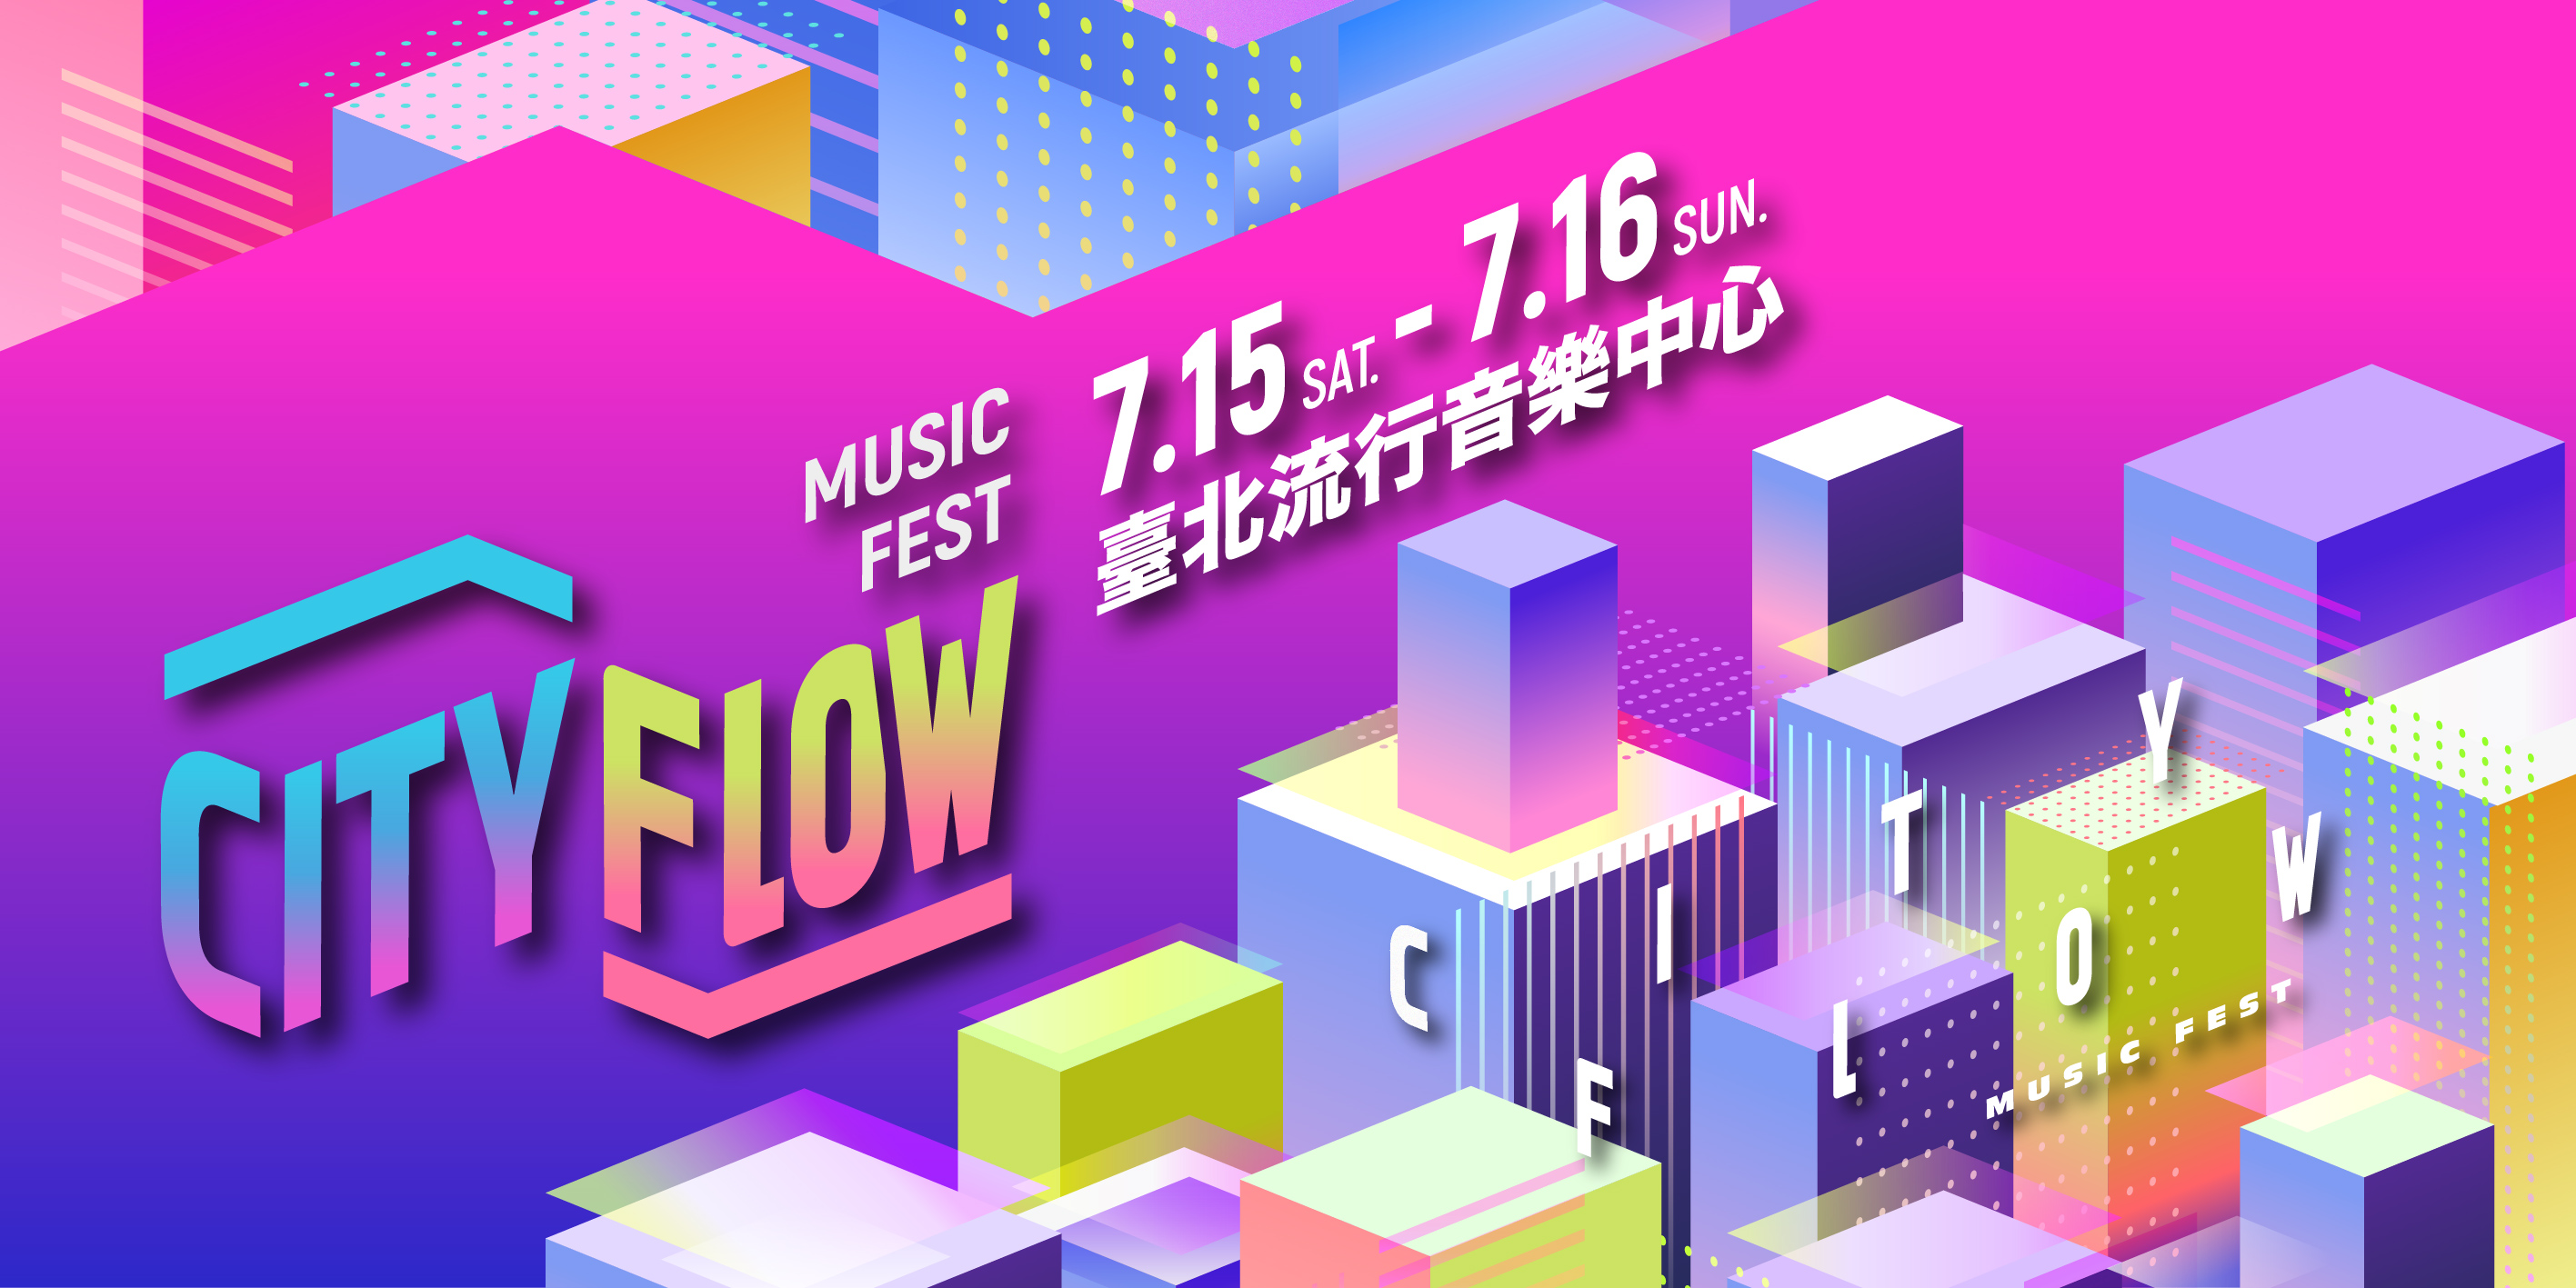 City Flow Music Festival